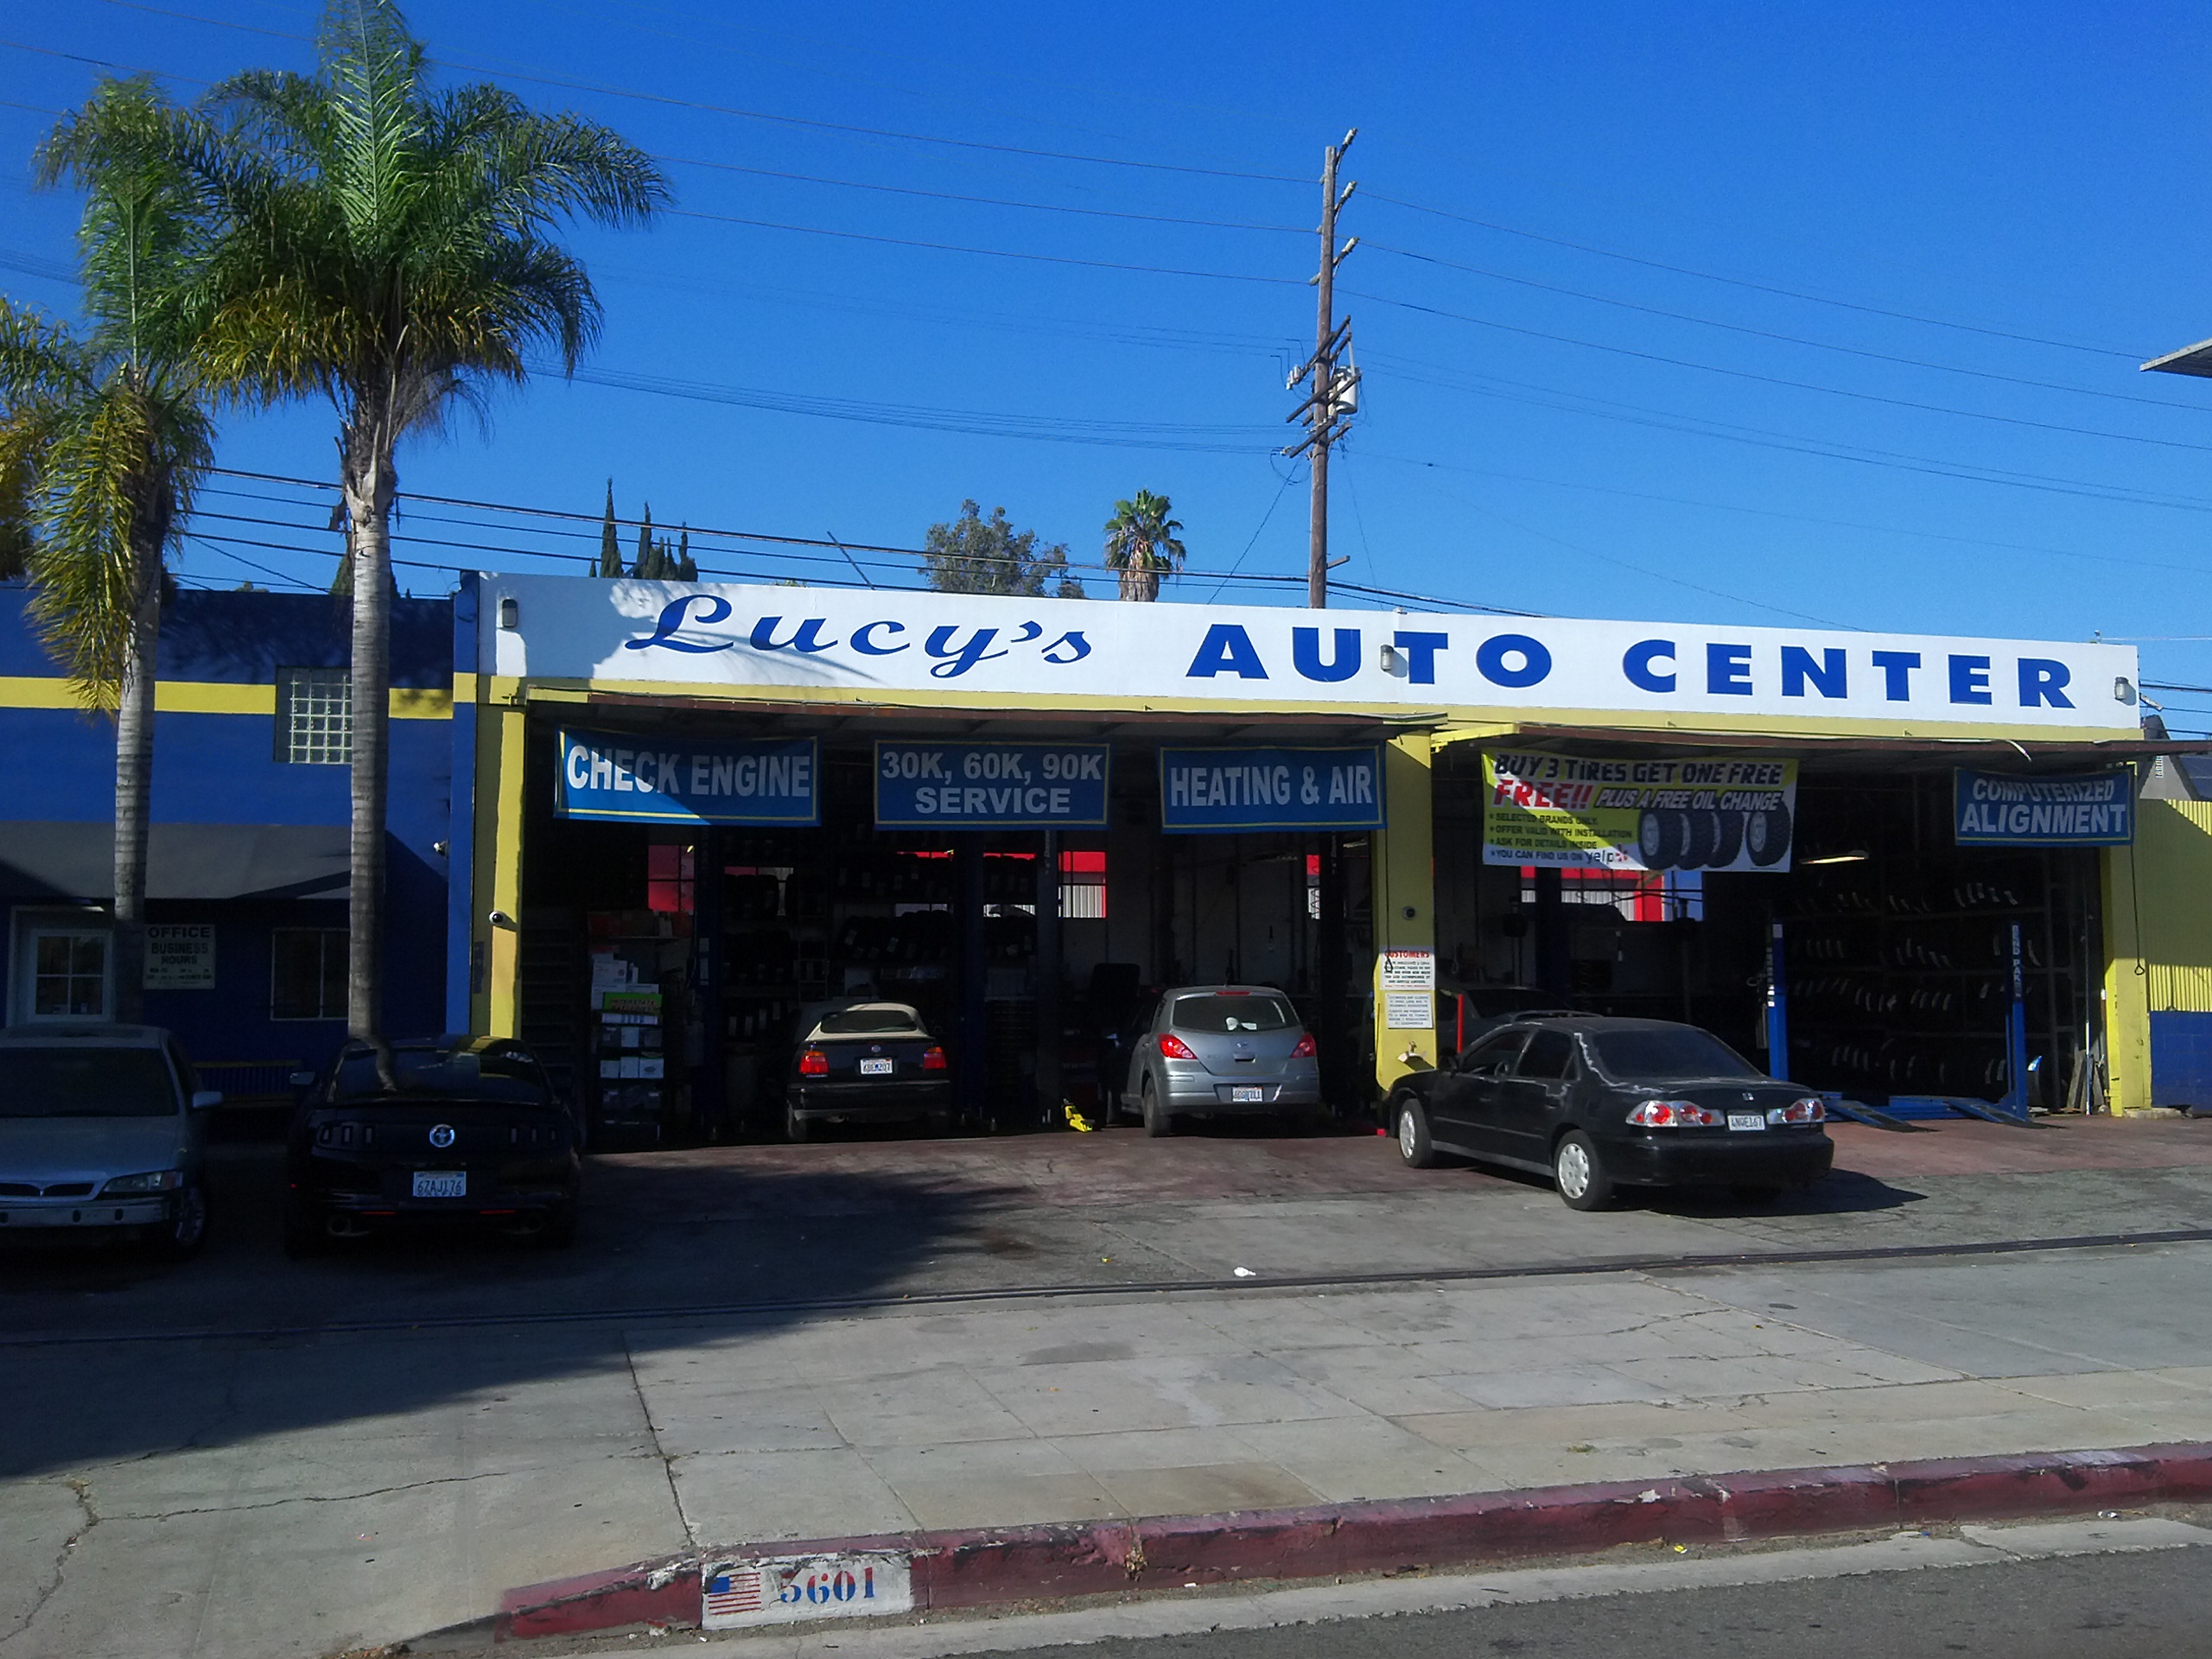 Lucy's Auto Center Photo